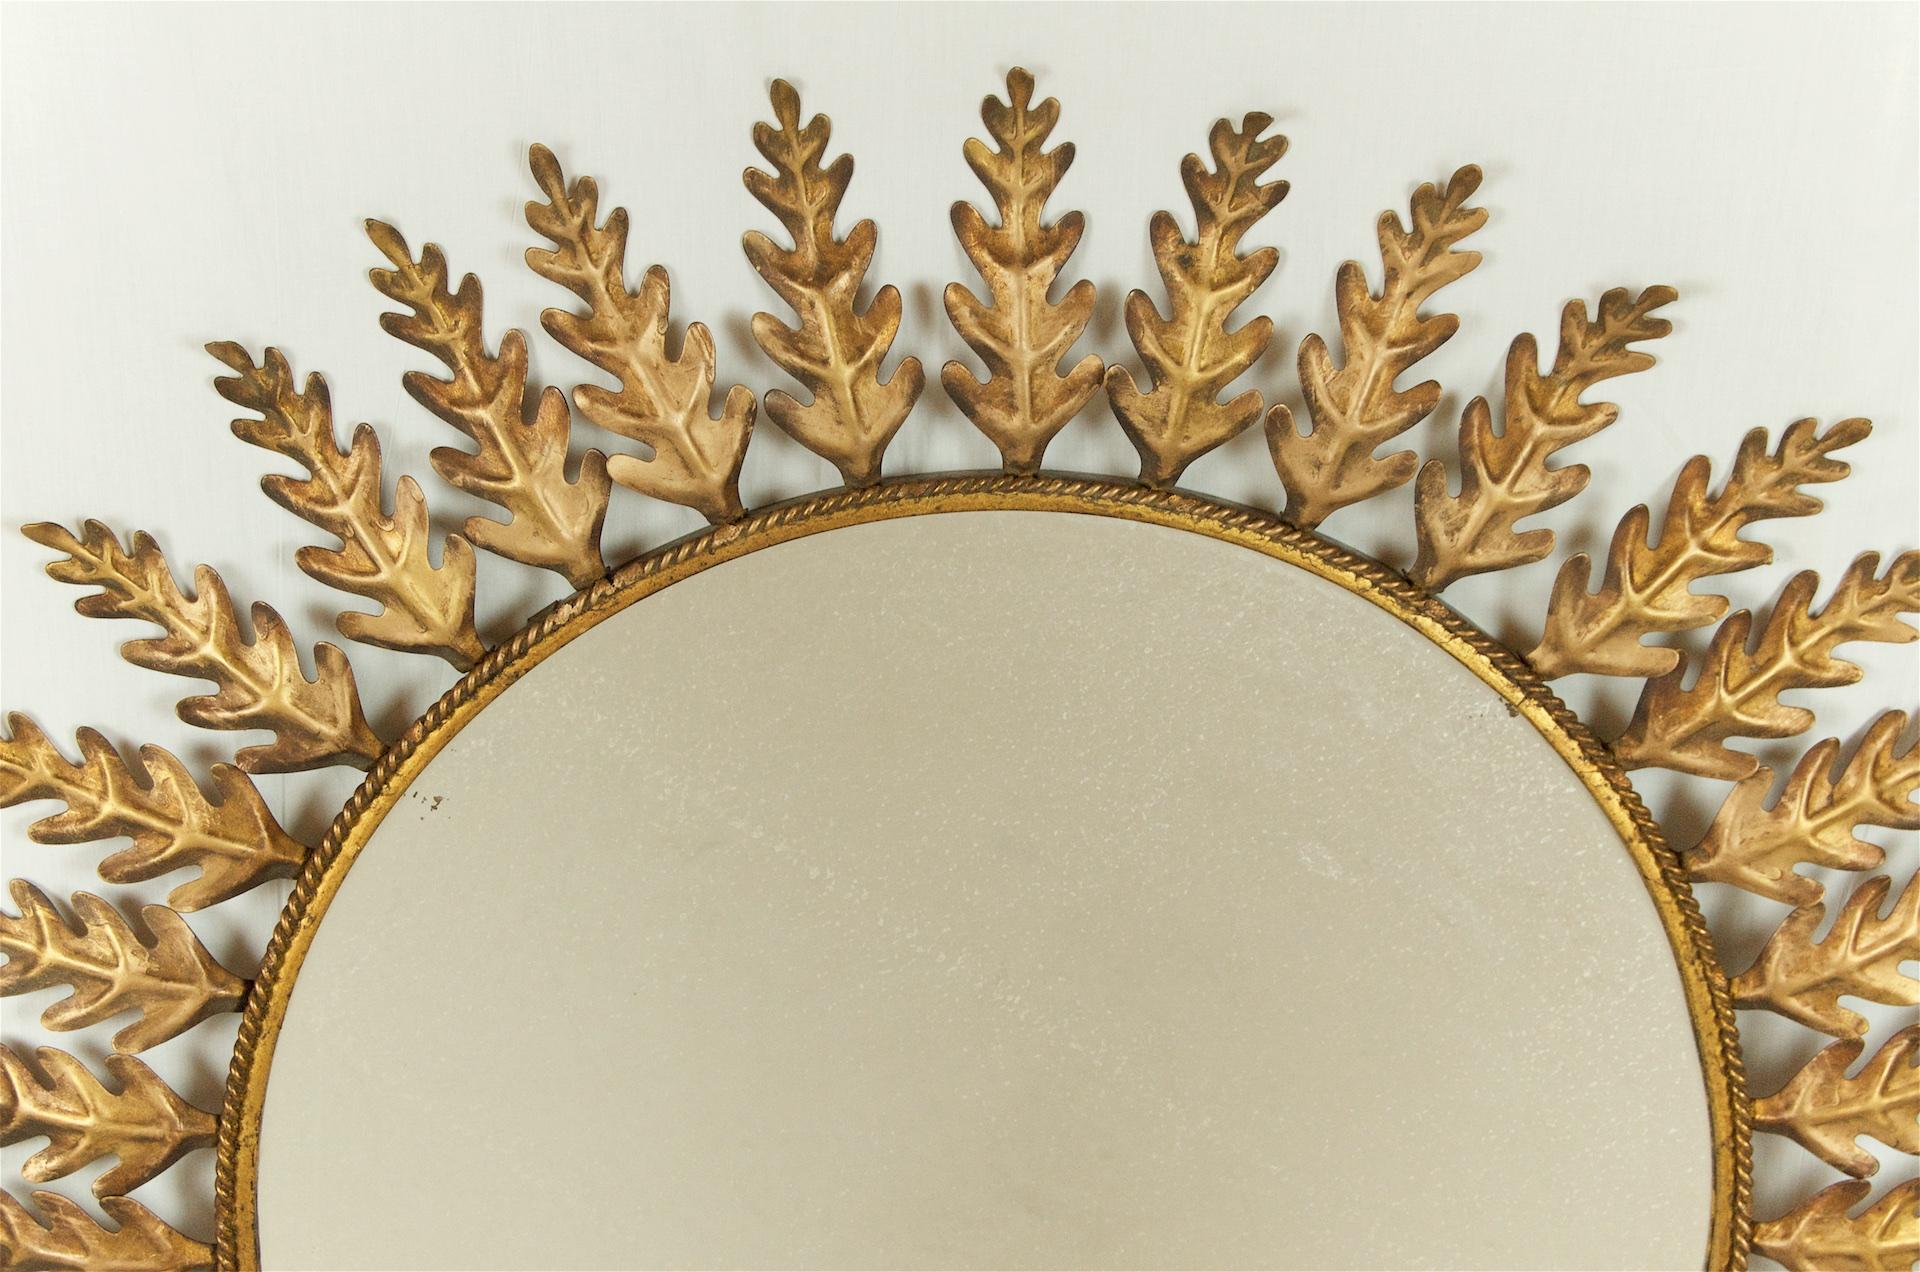 Spanish Huge Metal Round Leafed Sunburst Mirror For Sale